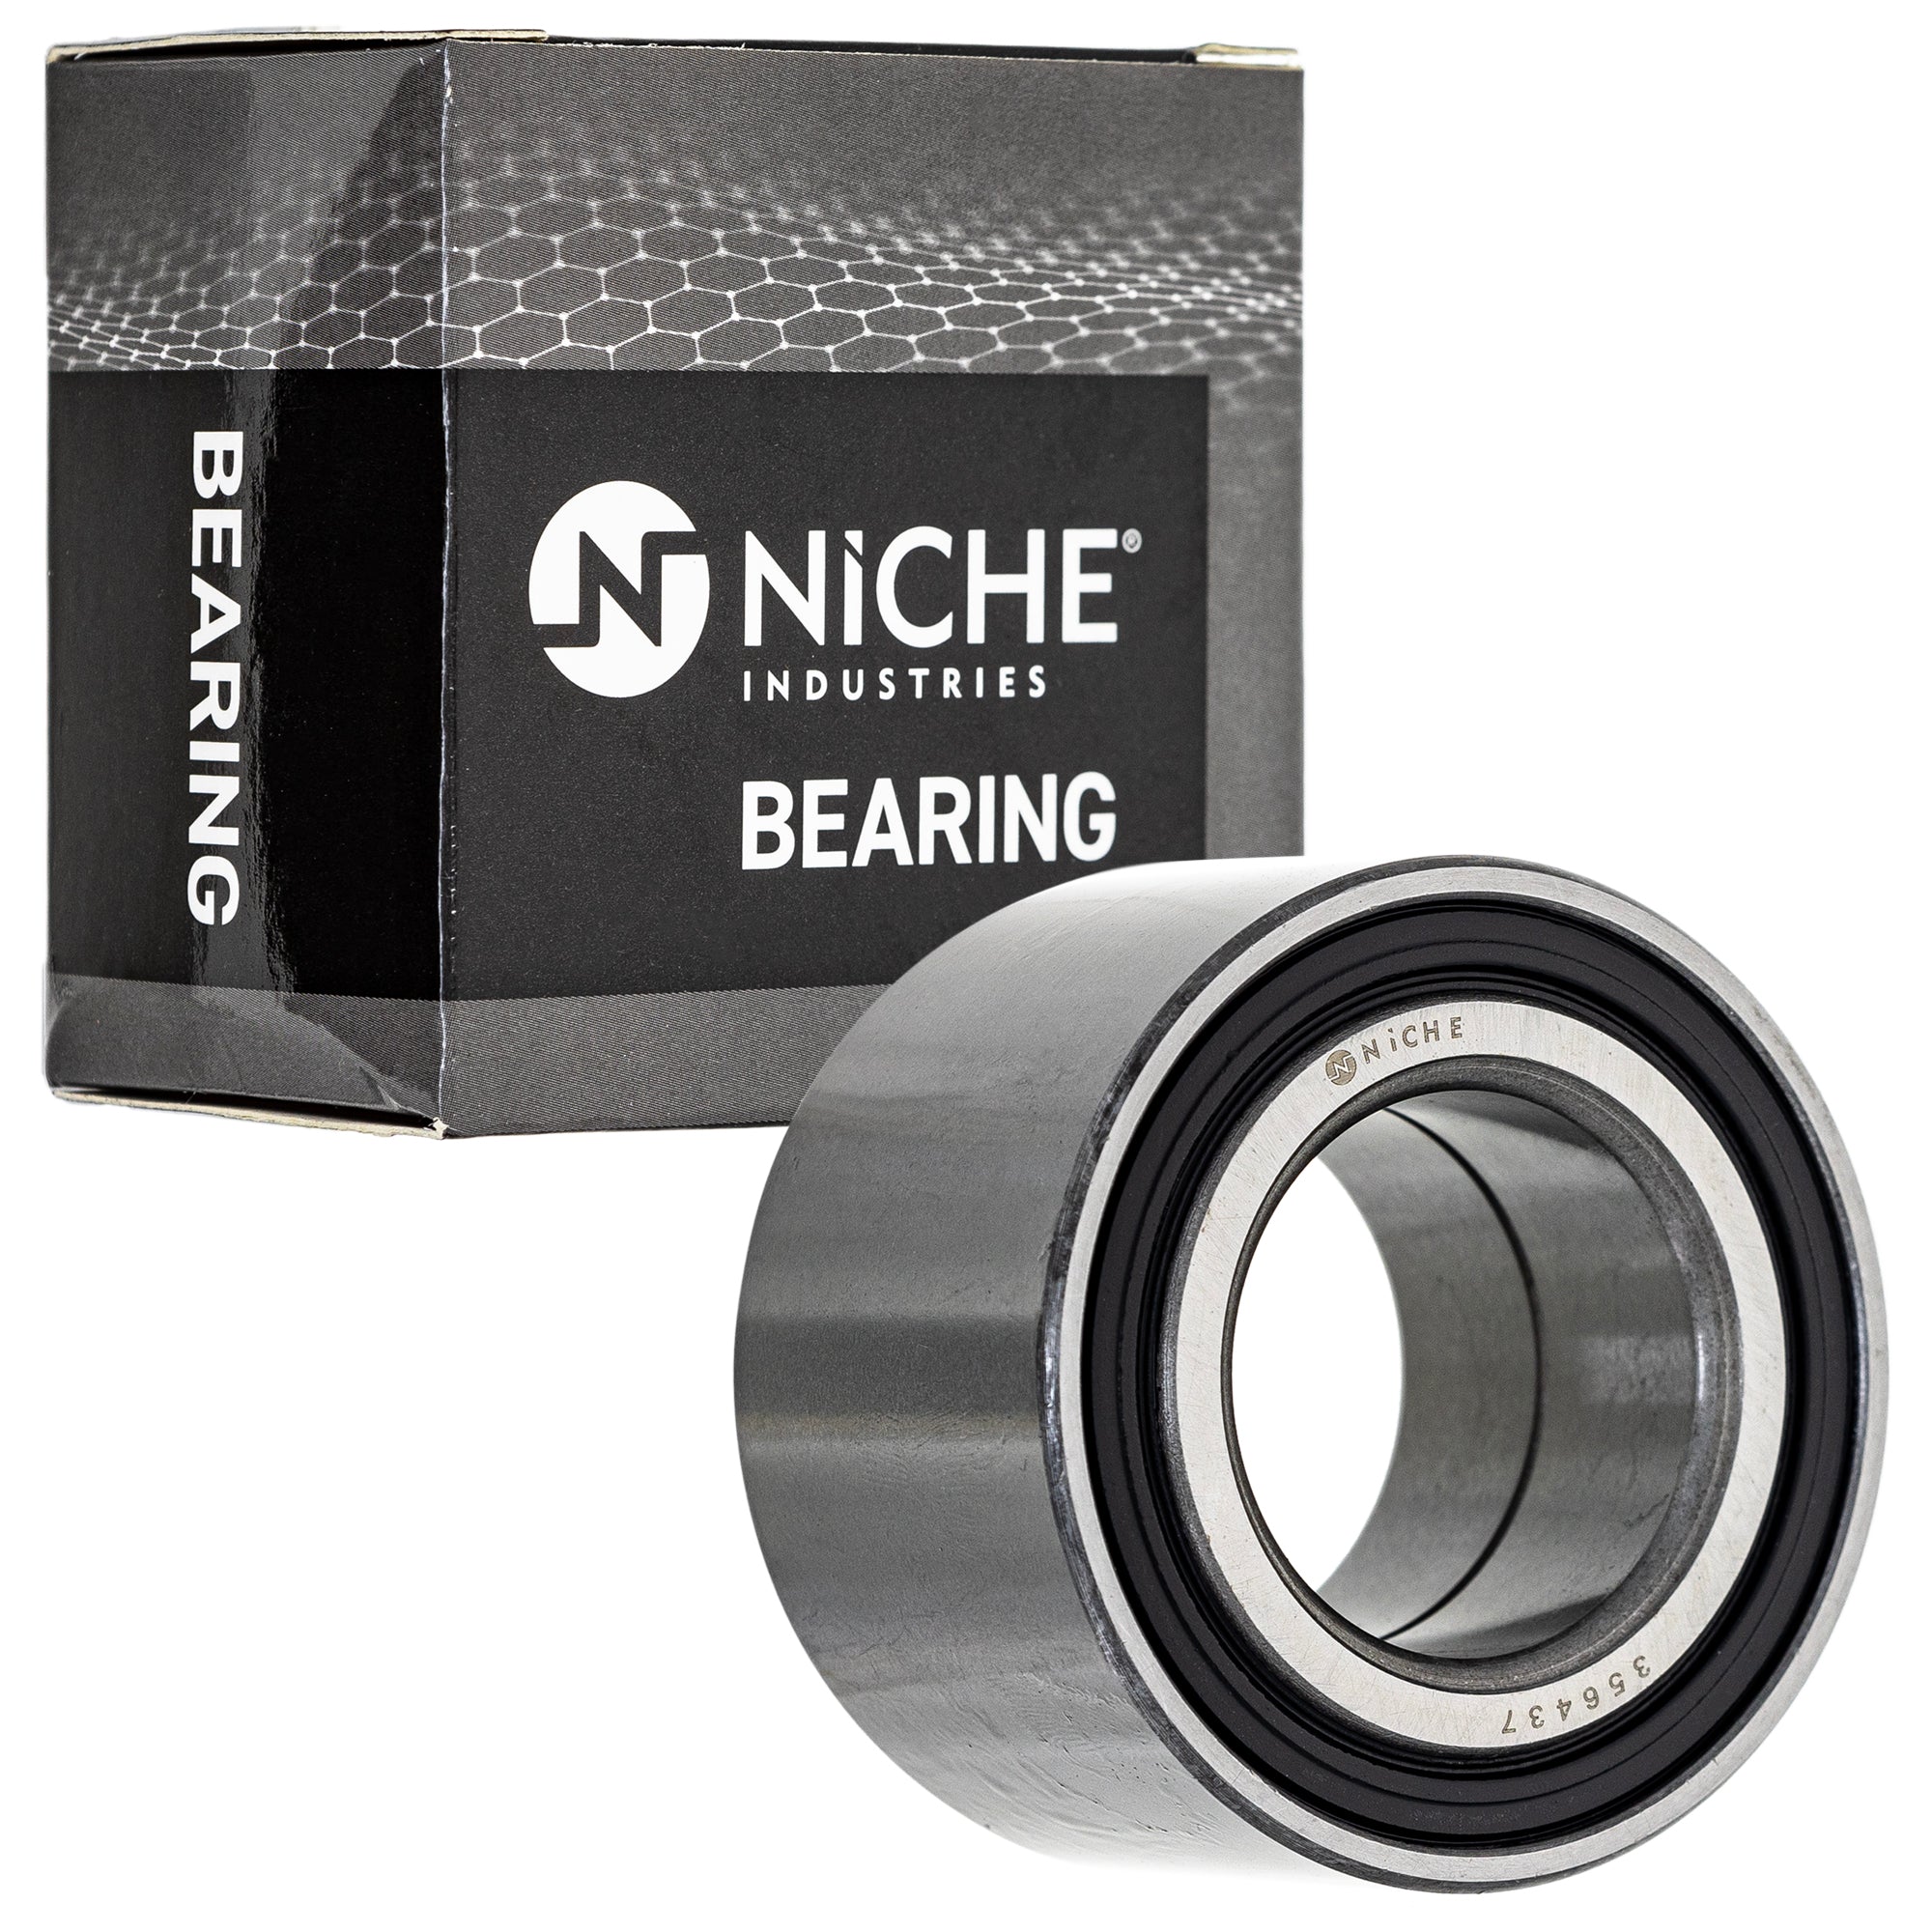 NICHE 519-CBB2283R Bearing 10-Pack for zOTHER GEM Trail-Blazer ST1300